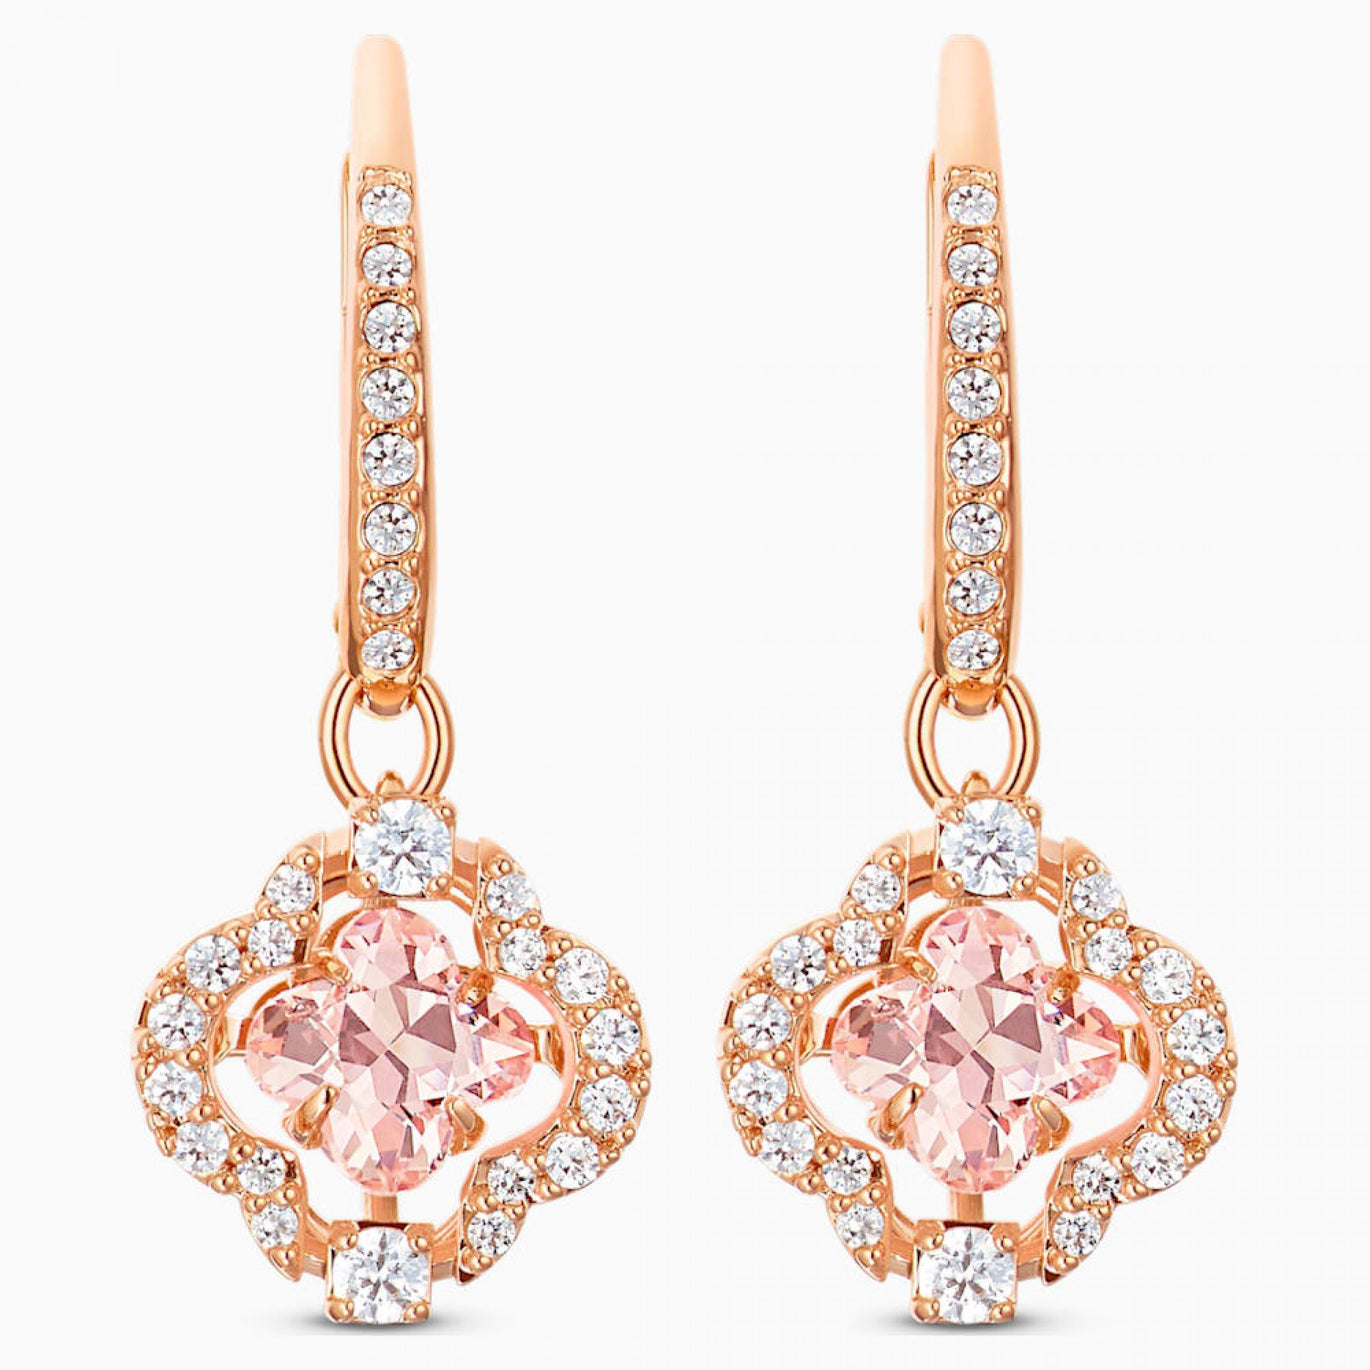 Swarovski Sparkling Dance Clover Pierced Earrings, Pink, Rose-Gold Tone Plated